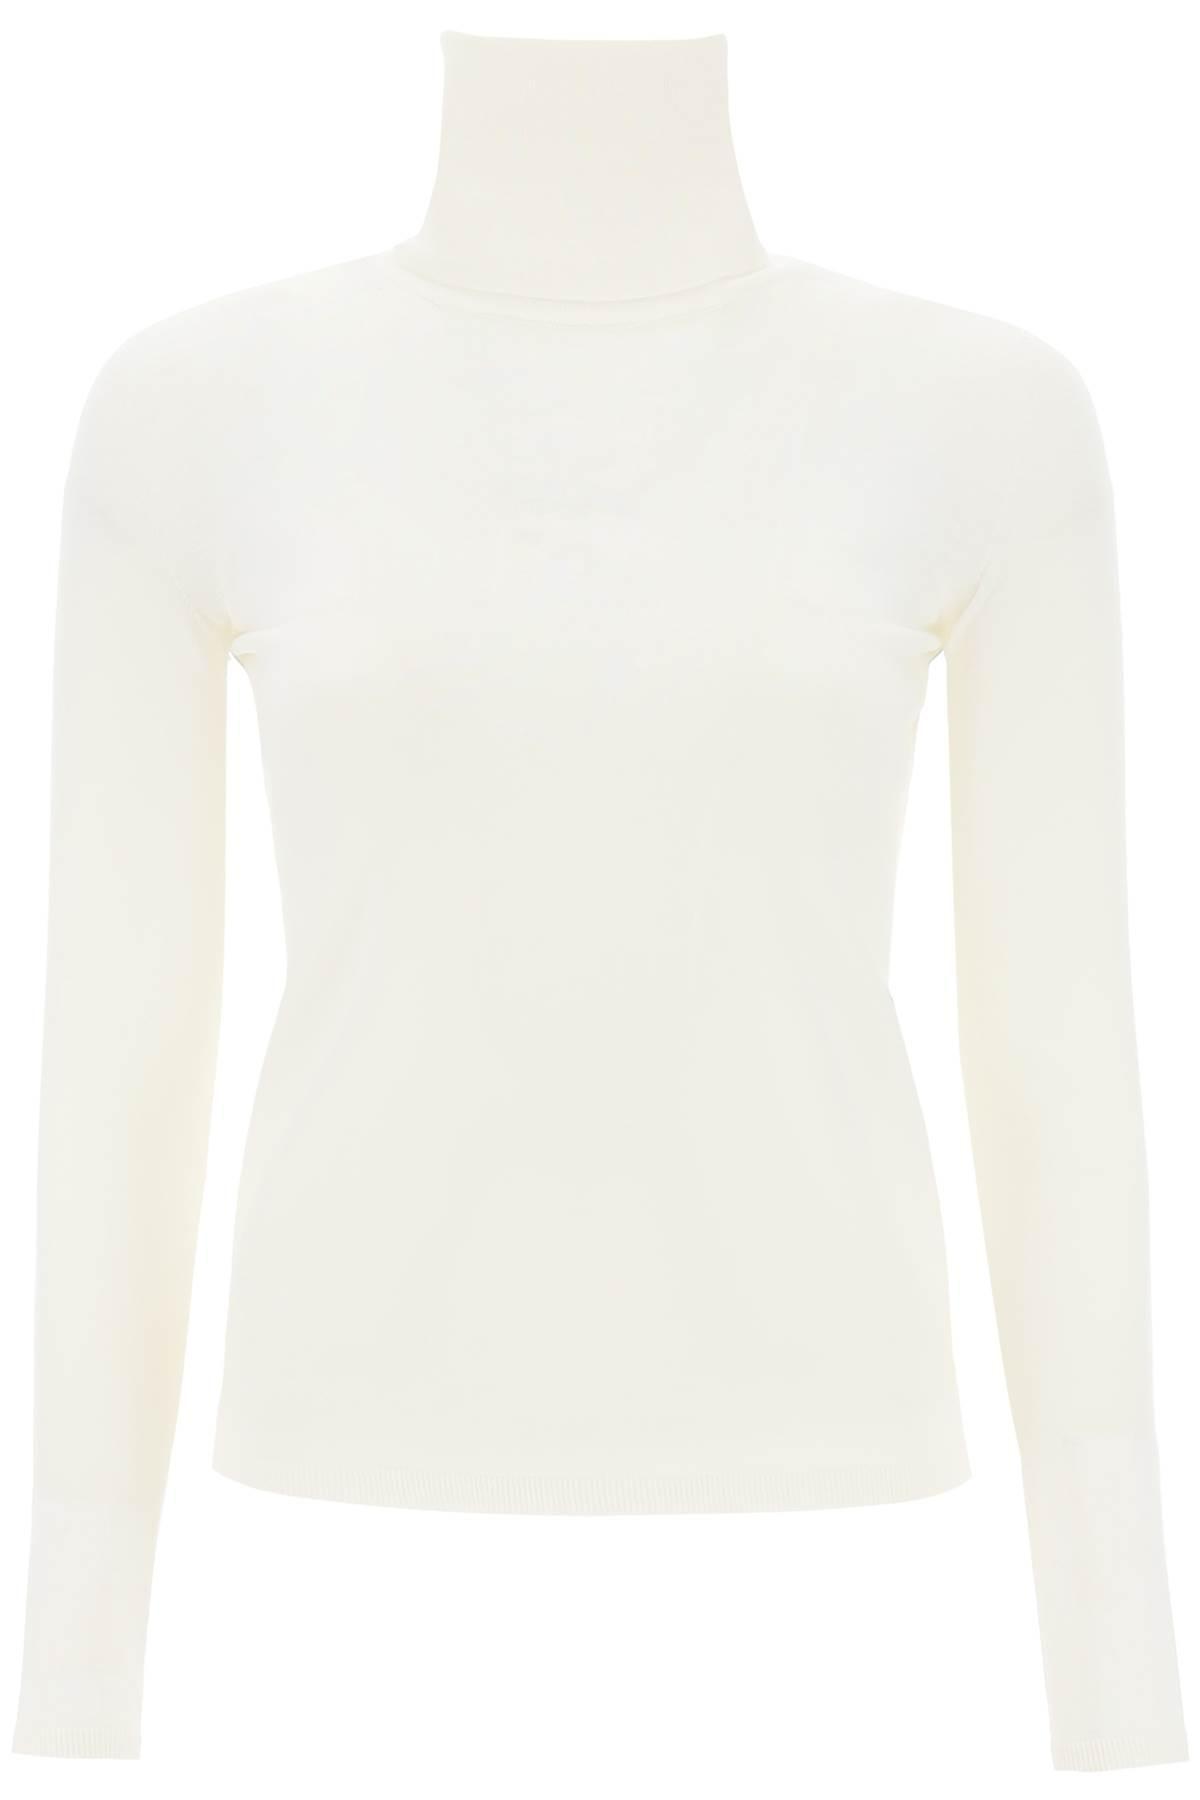 Max Mara 'palos' Turtleneck Sweater in White | Lyst